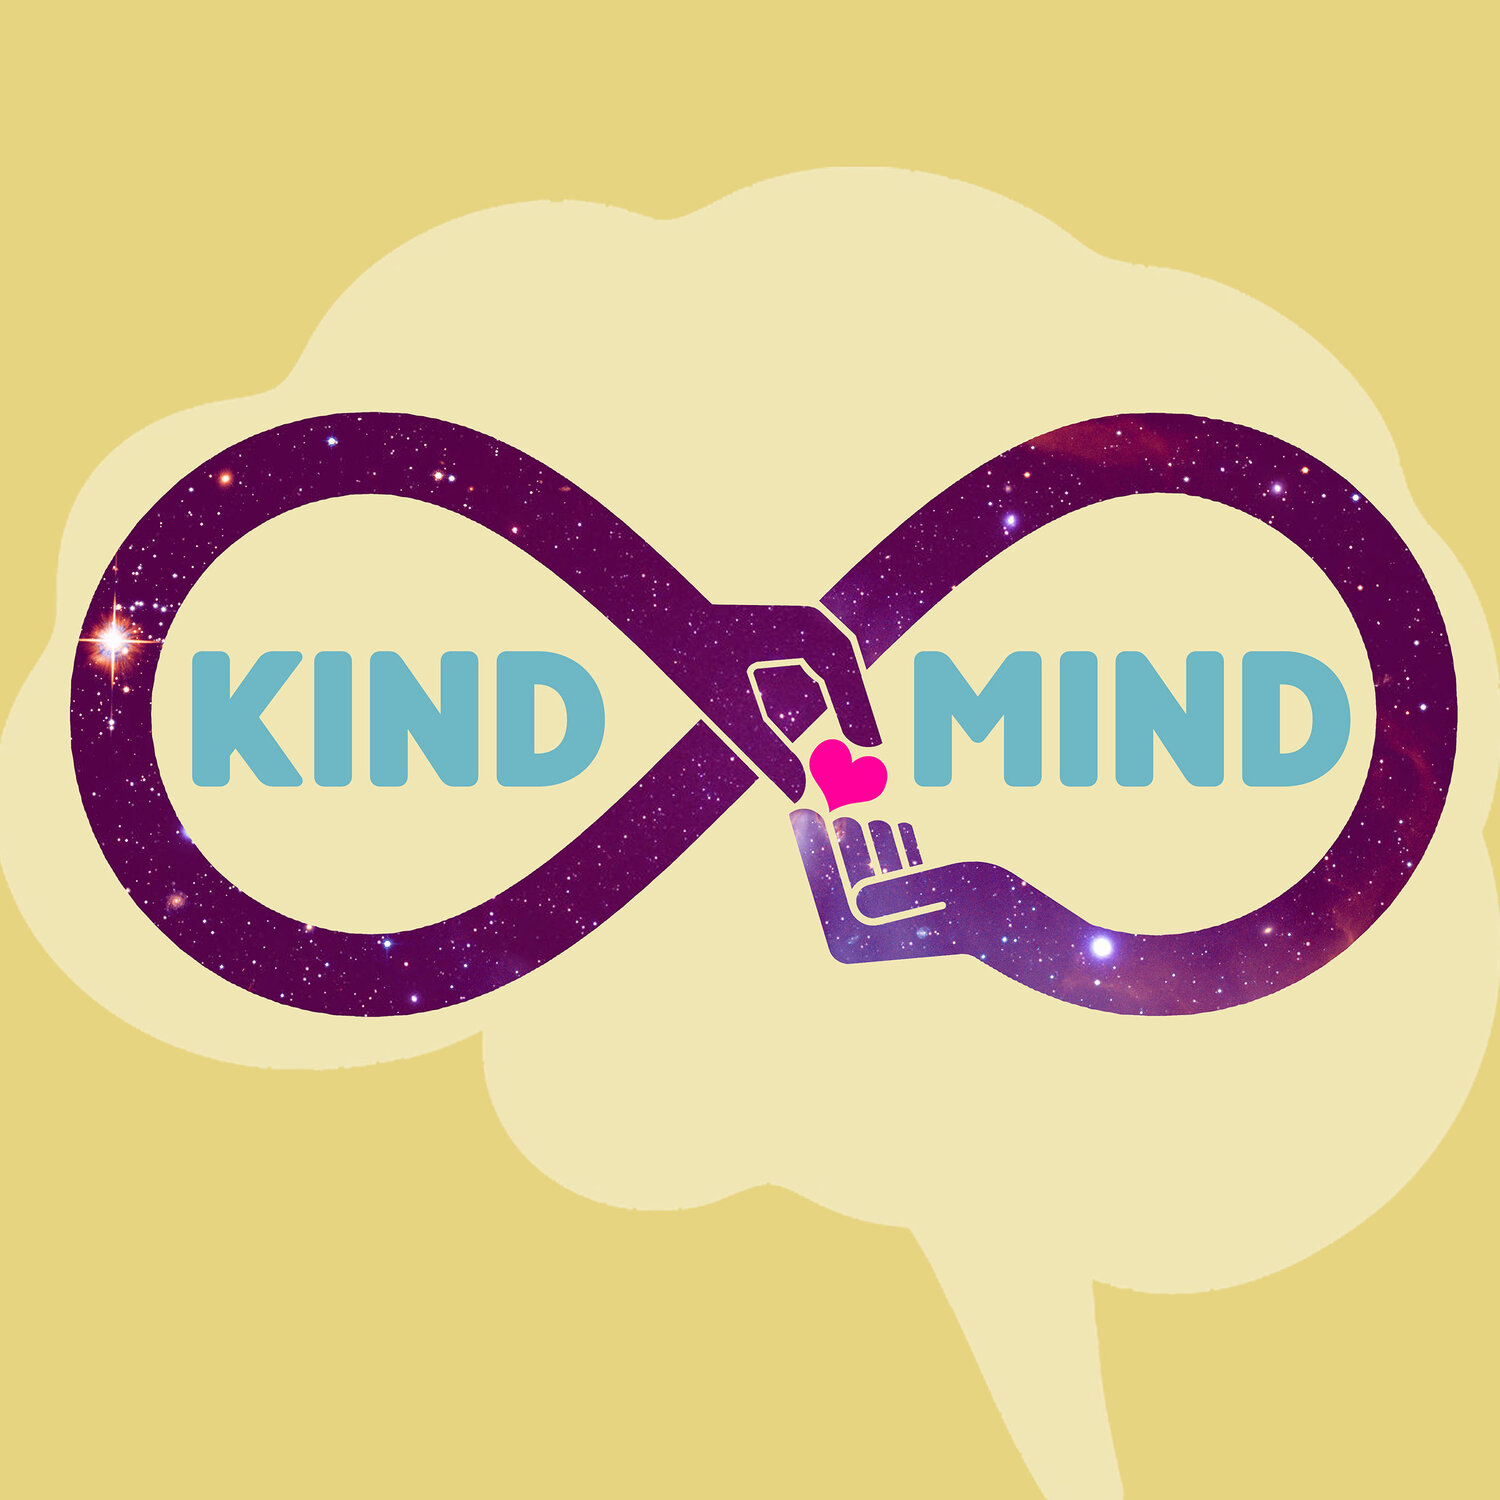 Kind fear. Kind картинка. Be kind to your Mind. Kind Wicked картинки для детей. Podcast.